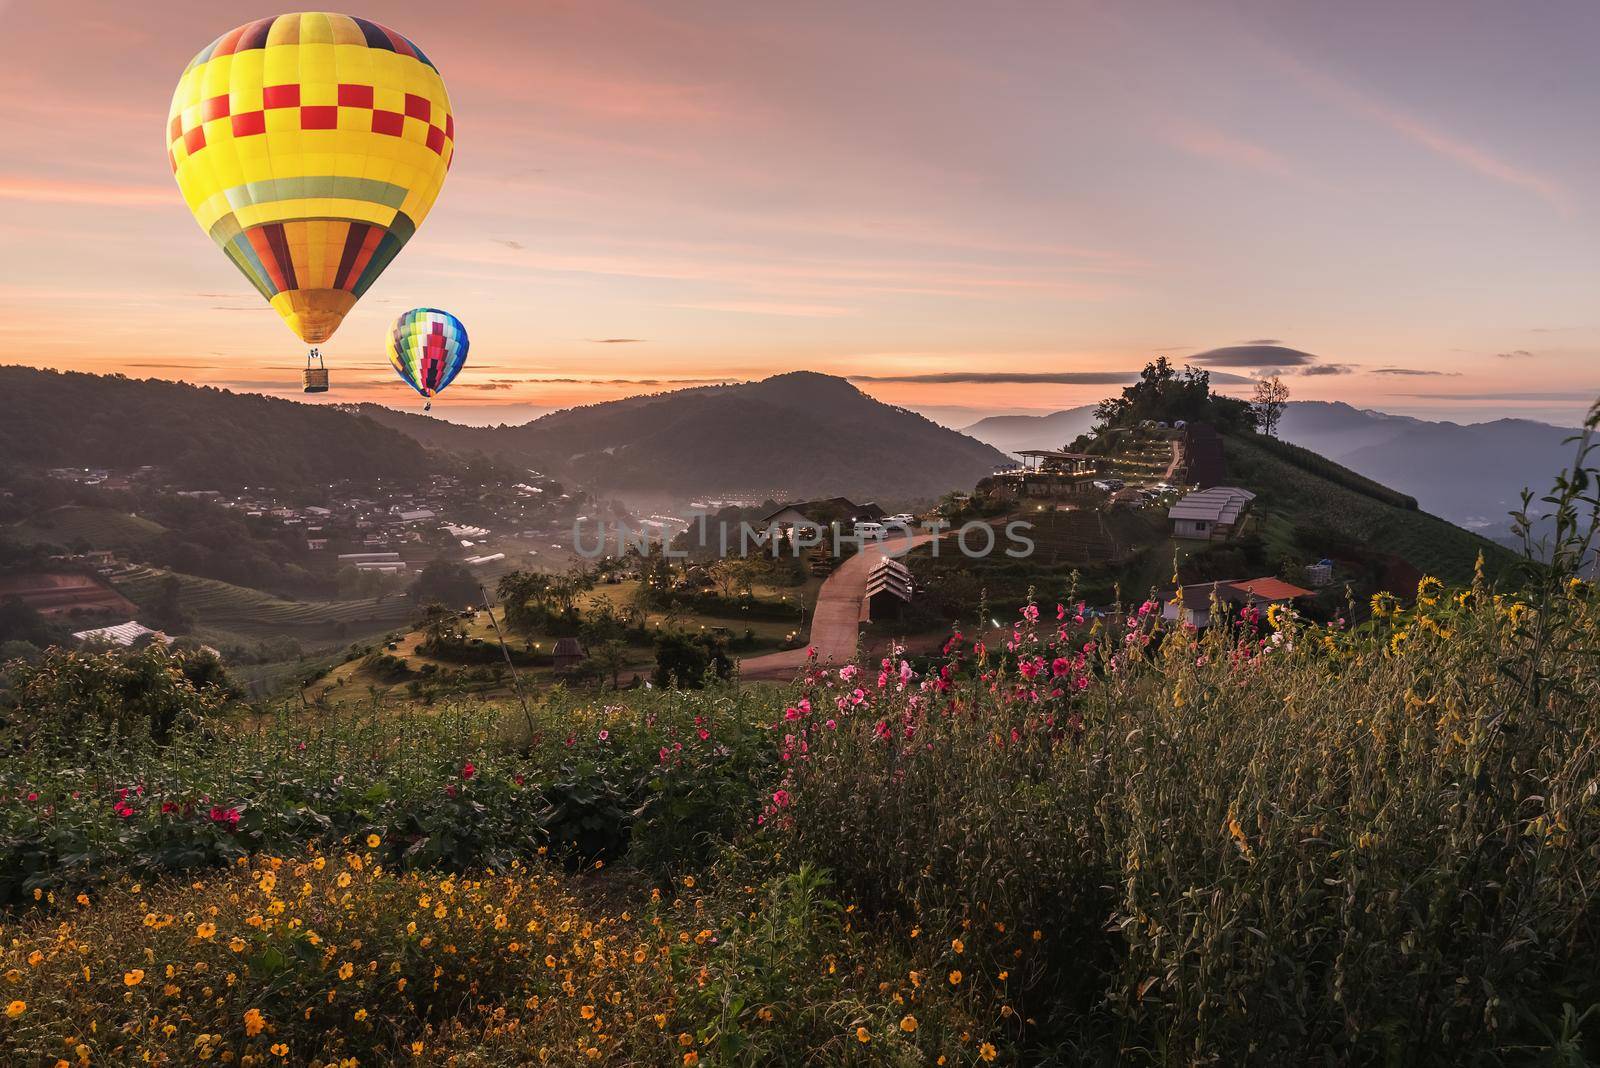 balloon over the mountain view by Wmpix